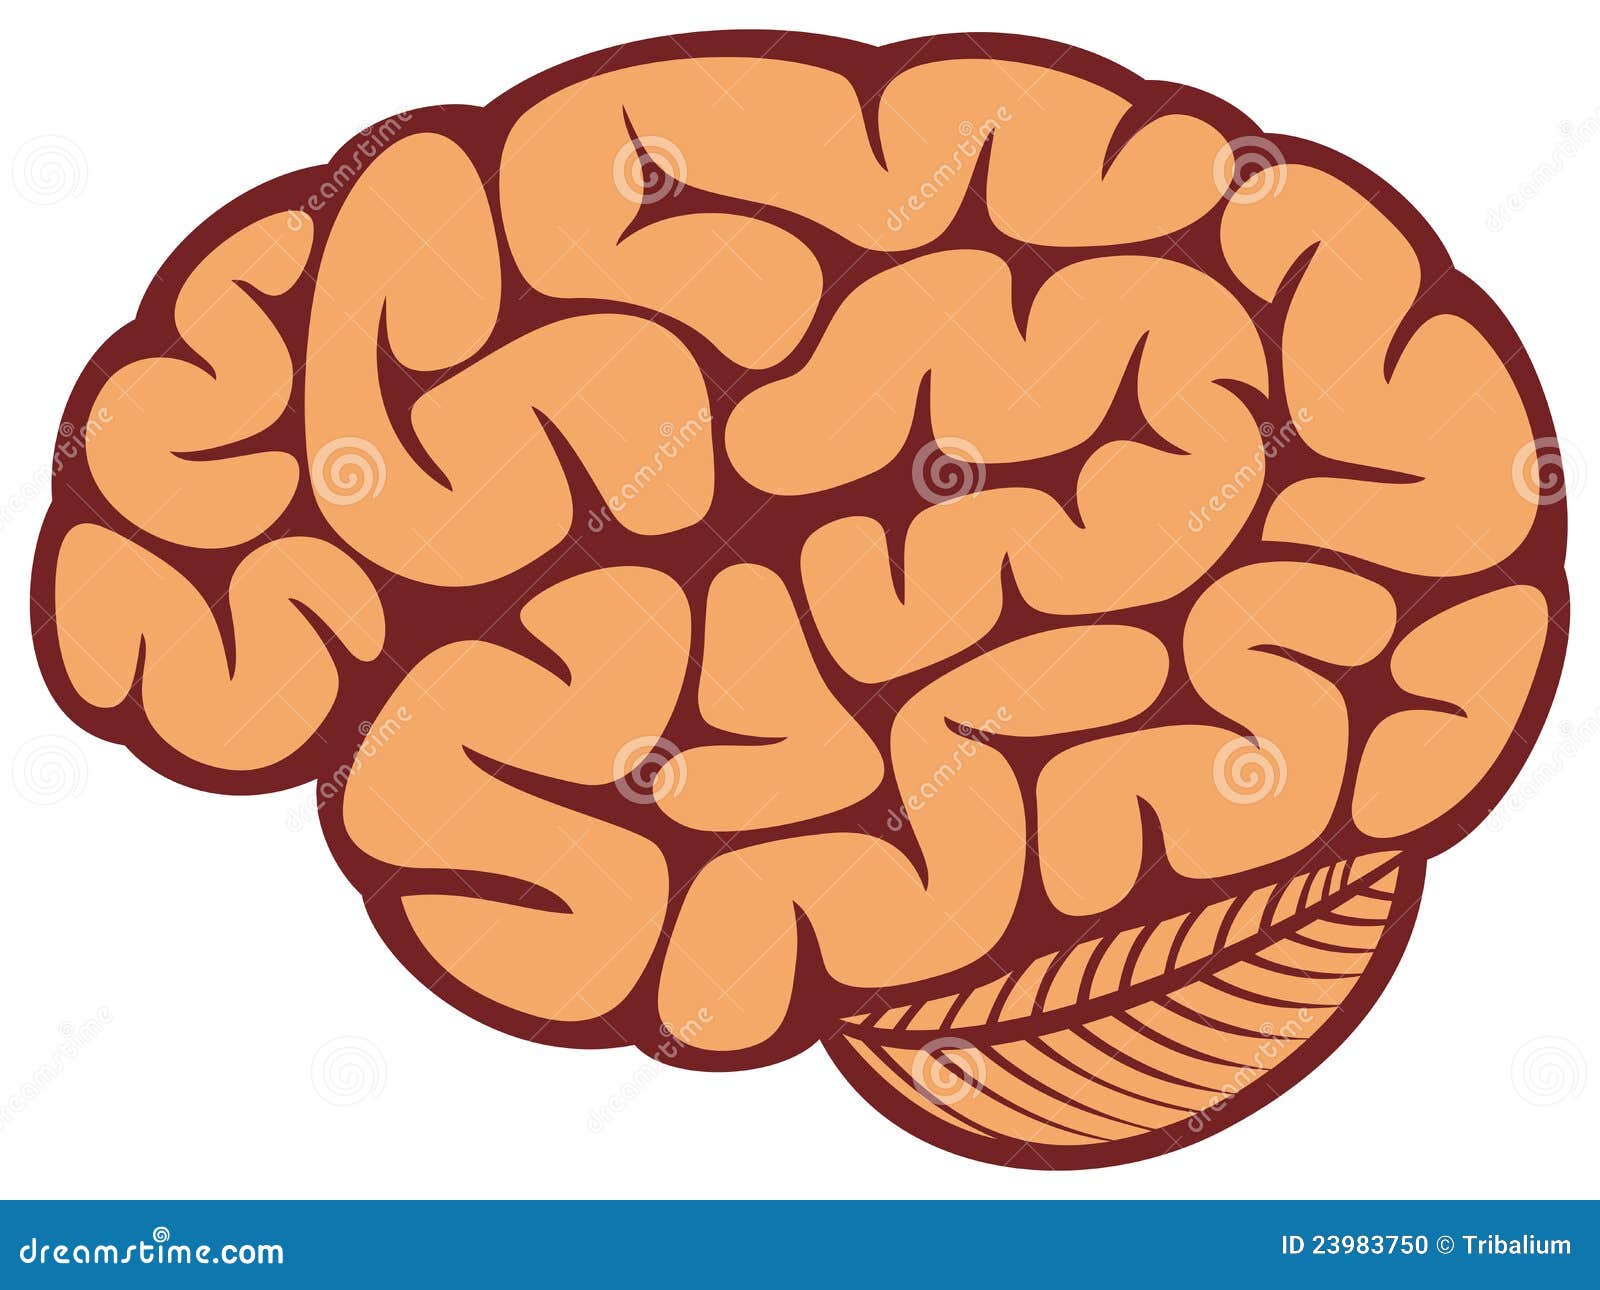 clipart of human brain - photo #25